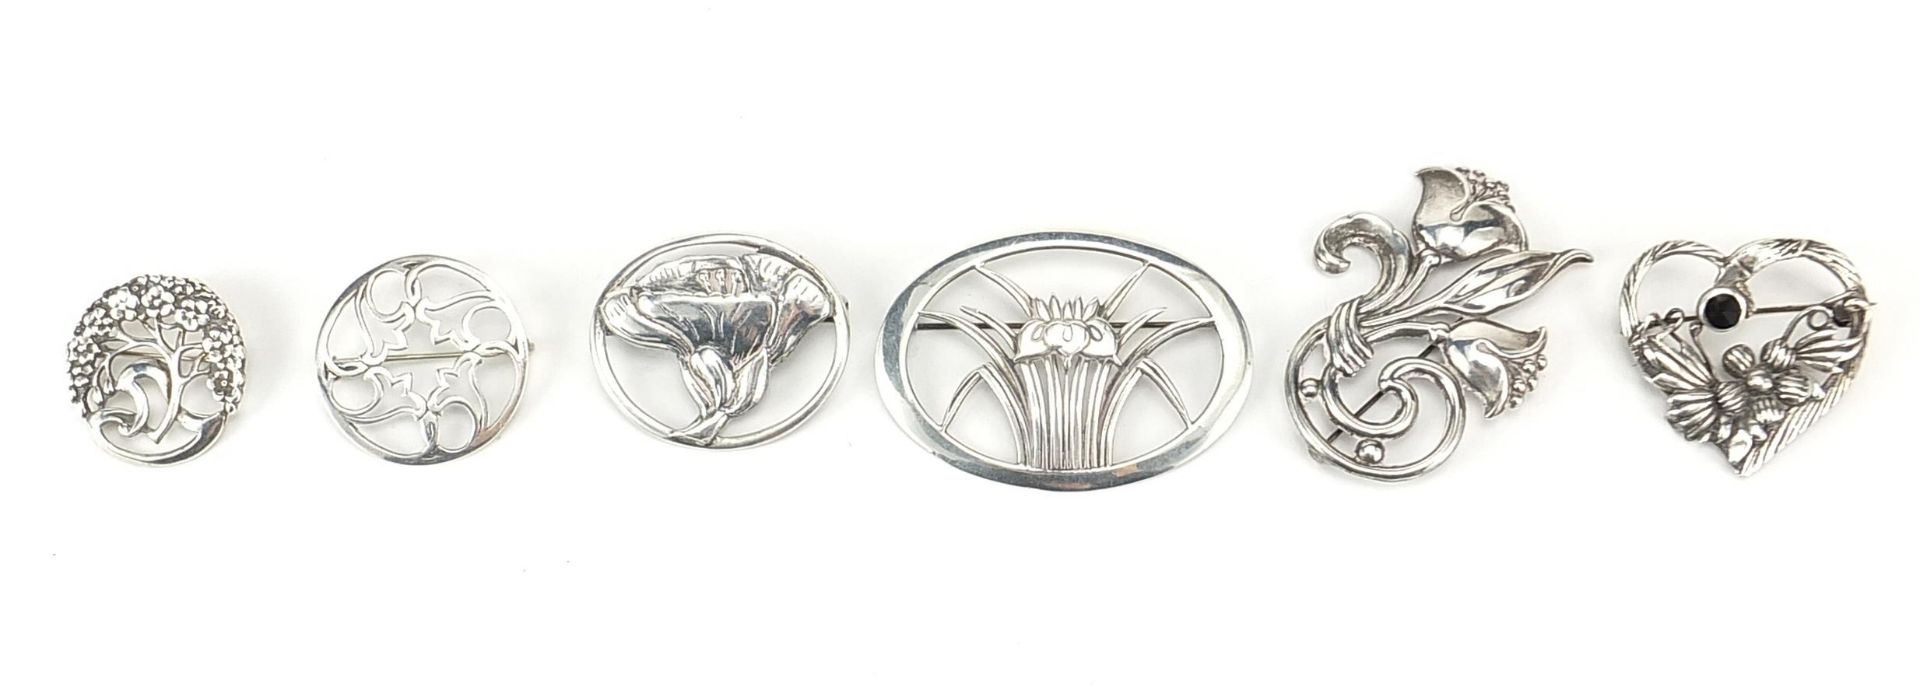 Six Art Nouveau design silver brooches, the largest 5.8cm wide, total 49.8g